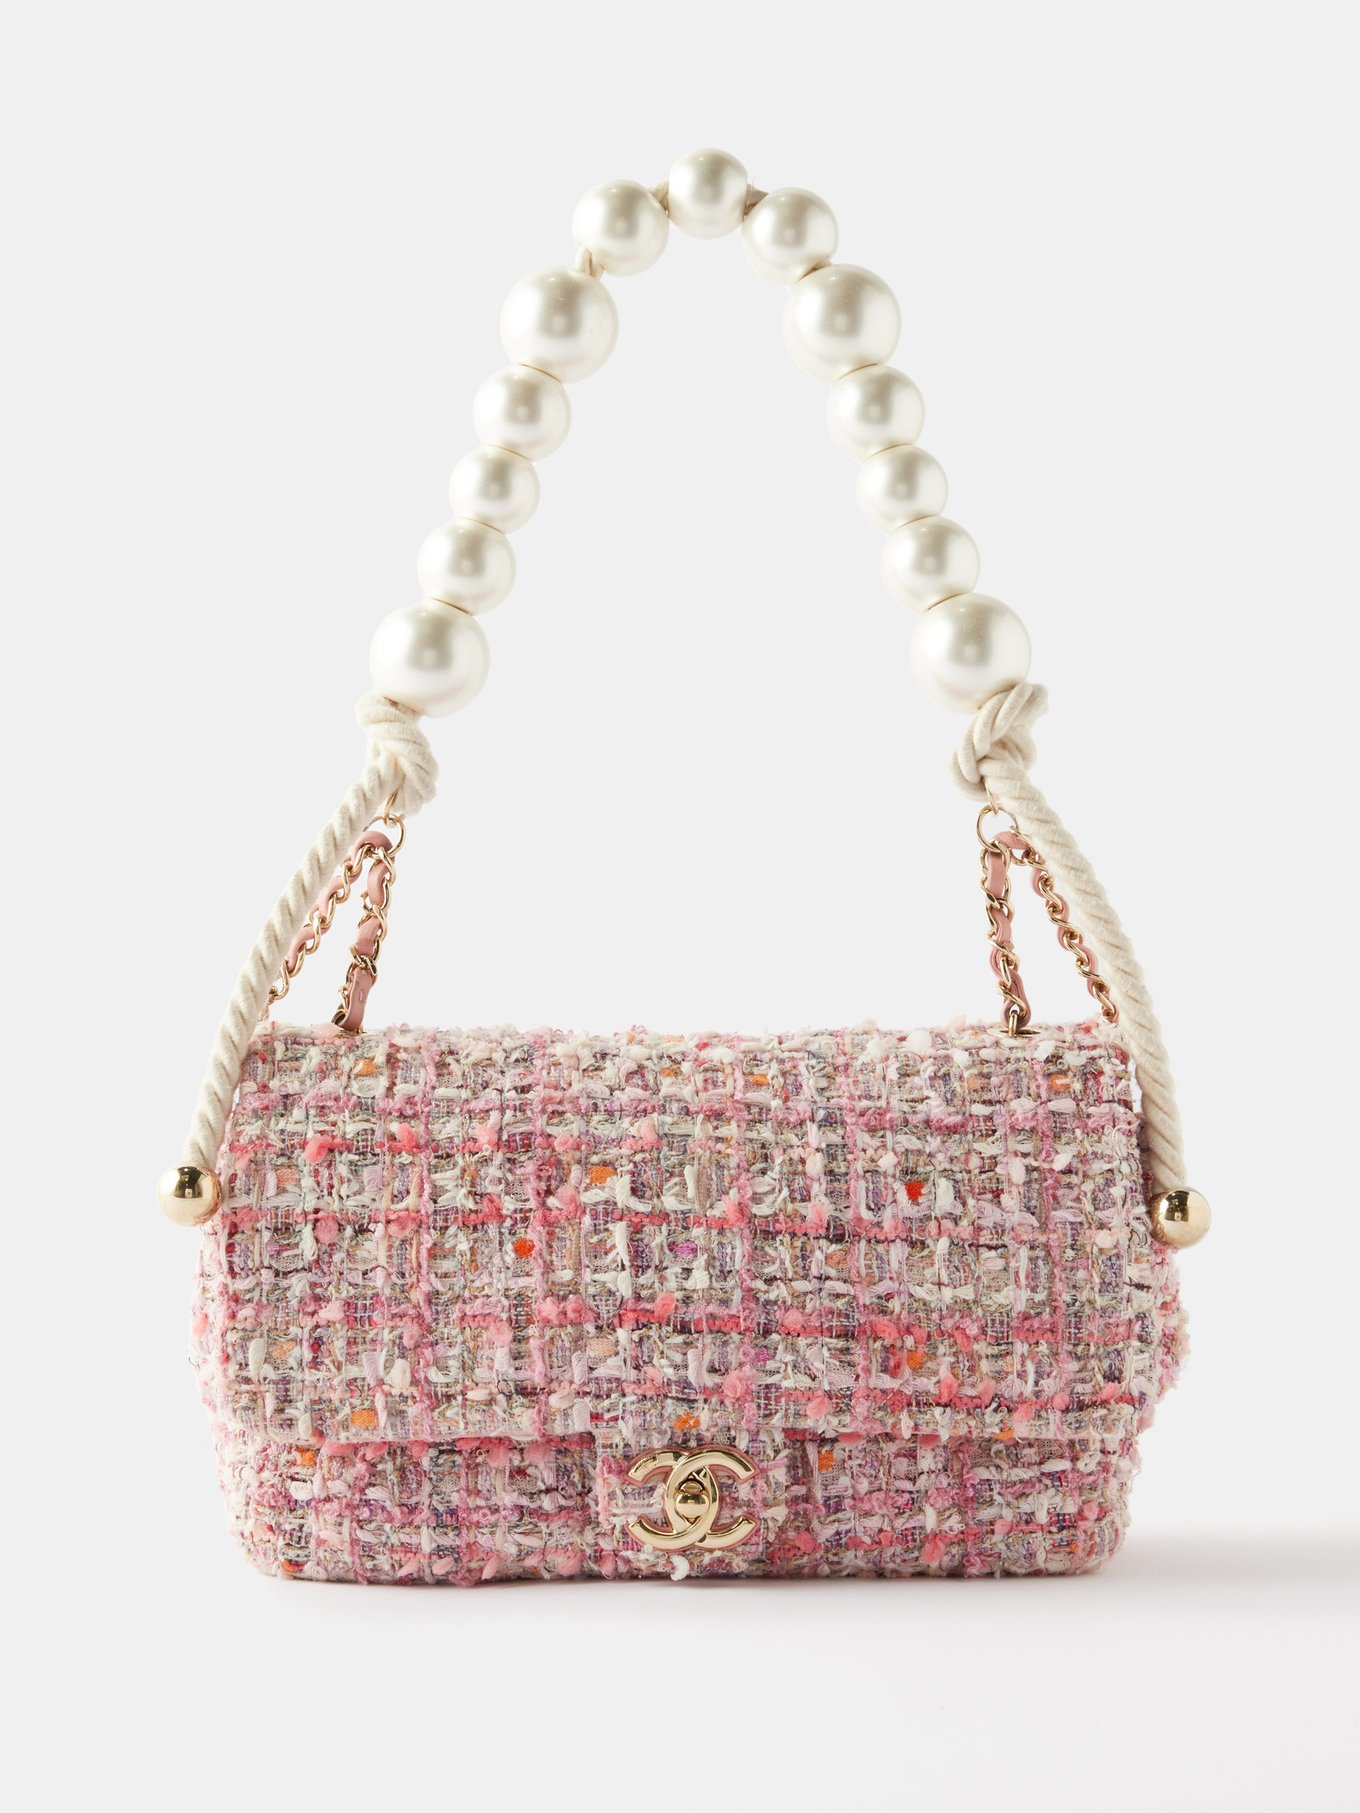 Jumbo Pearl Bag Strap - Yarn-a